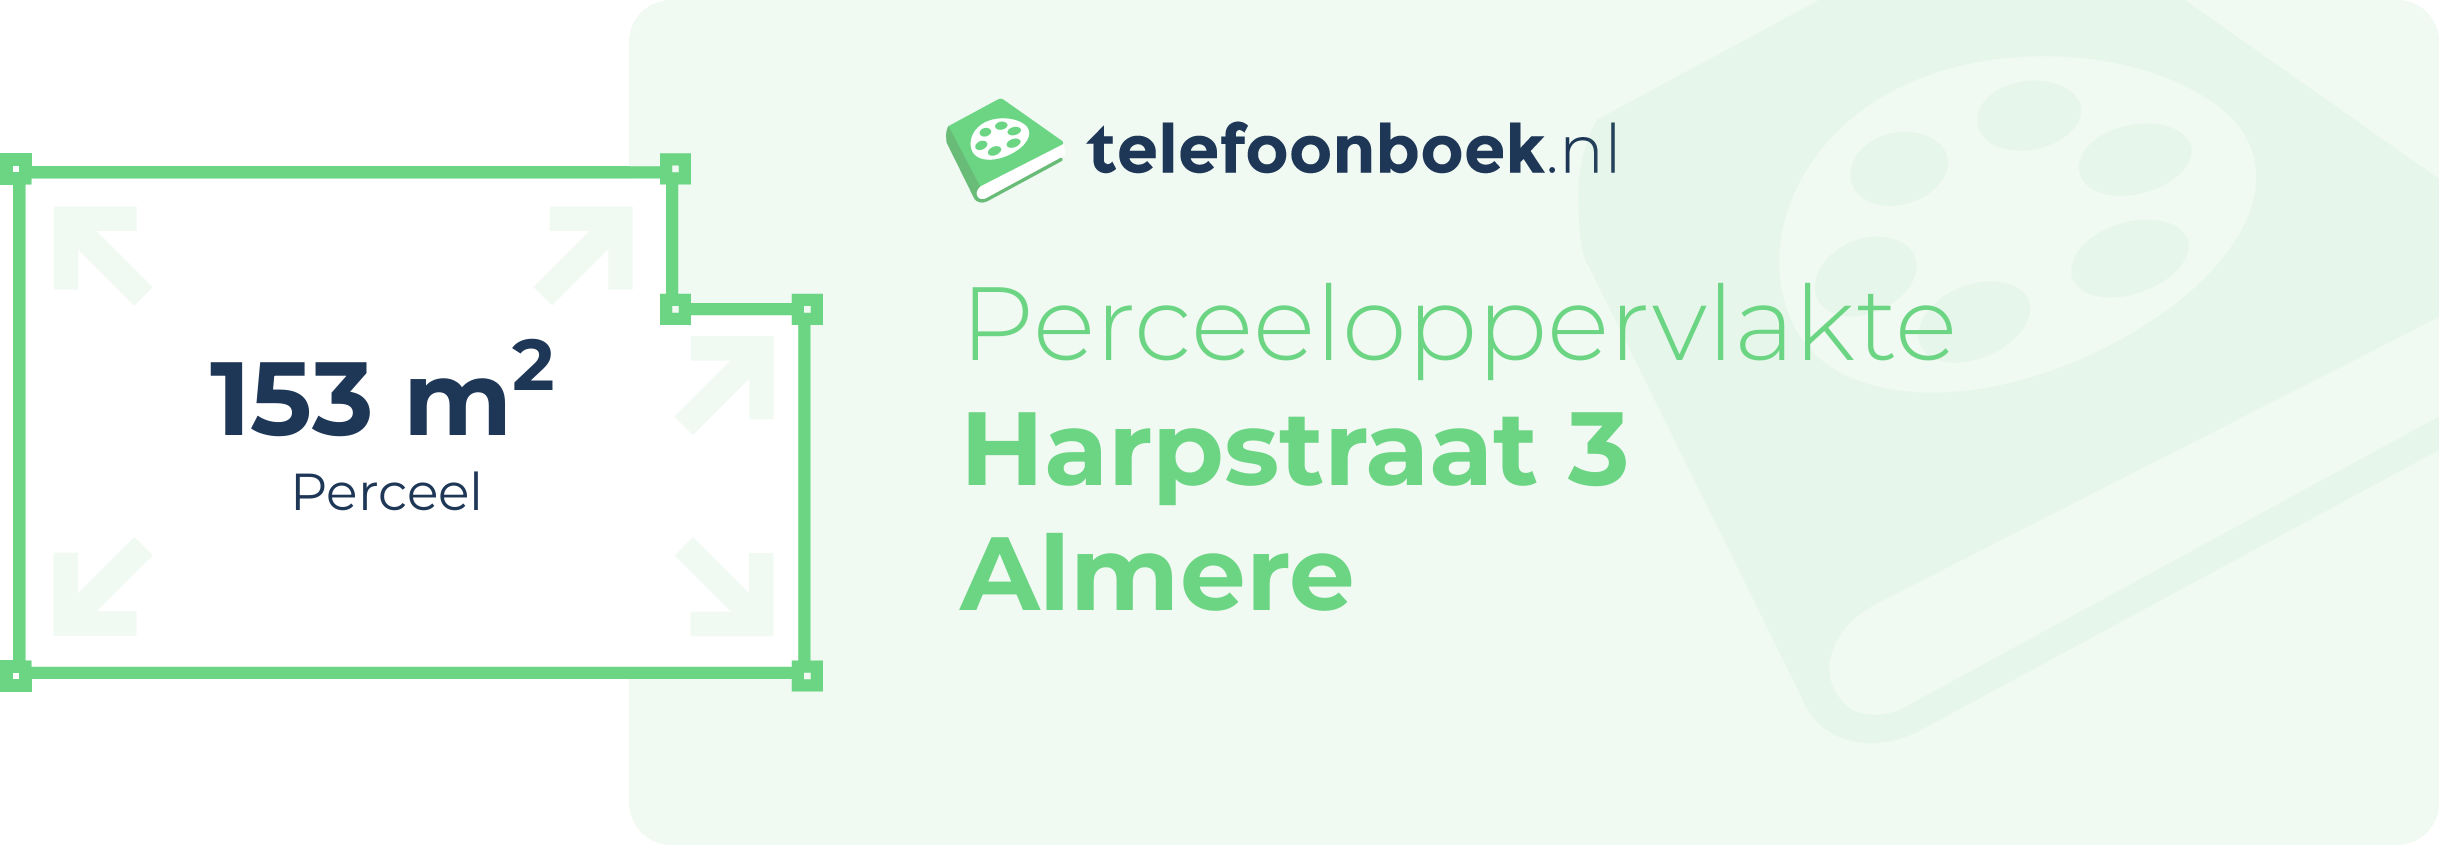 Perceeloppervlakte Harpstraat 3 Almere